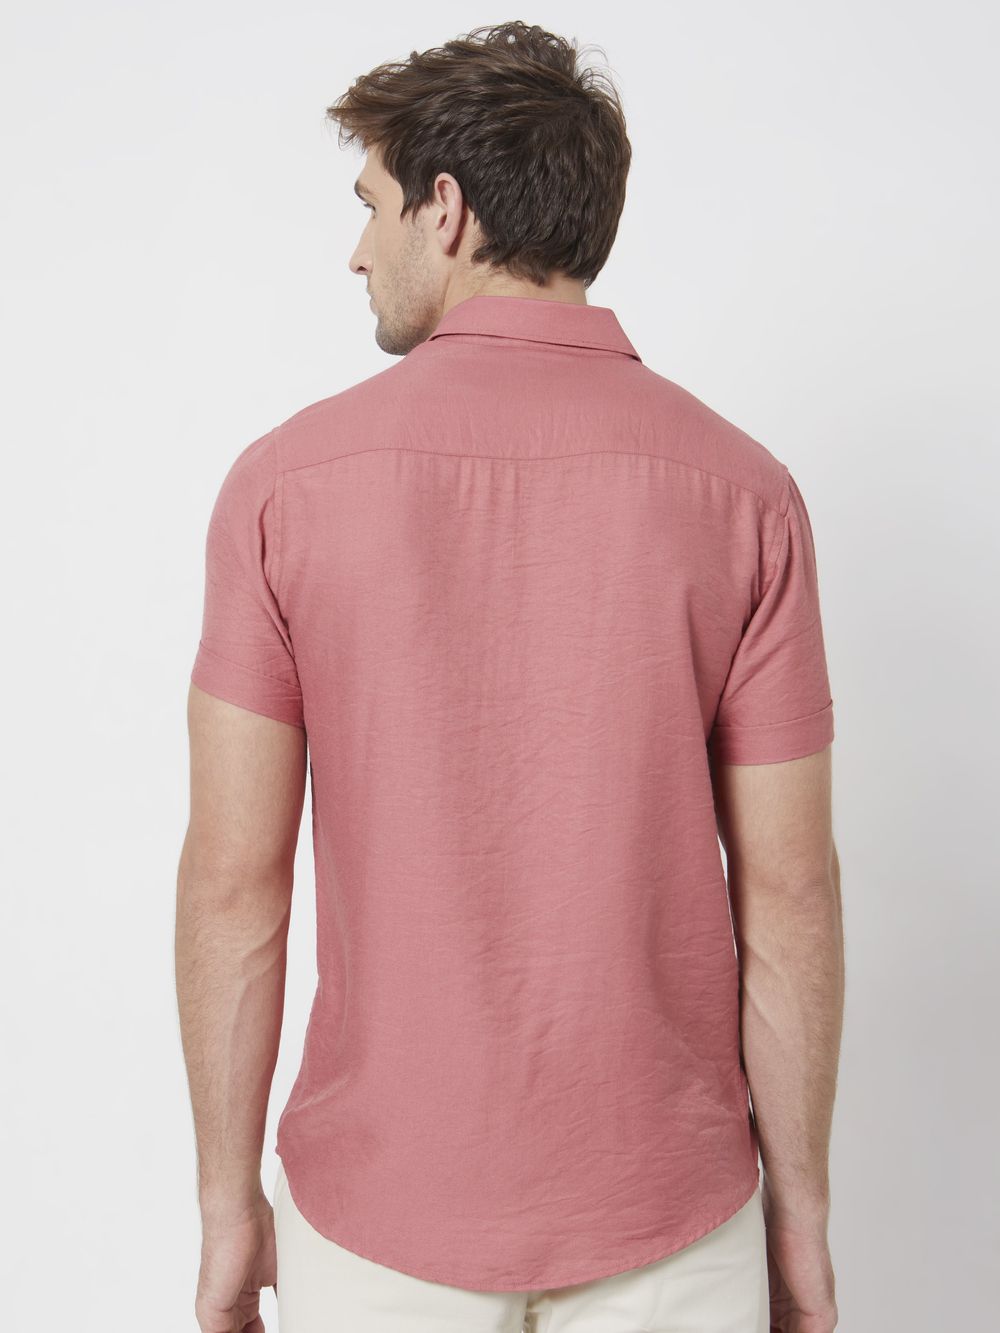 Pink Textured Plain Slim Fit Casual Shirt